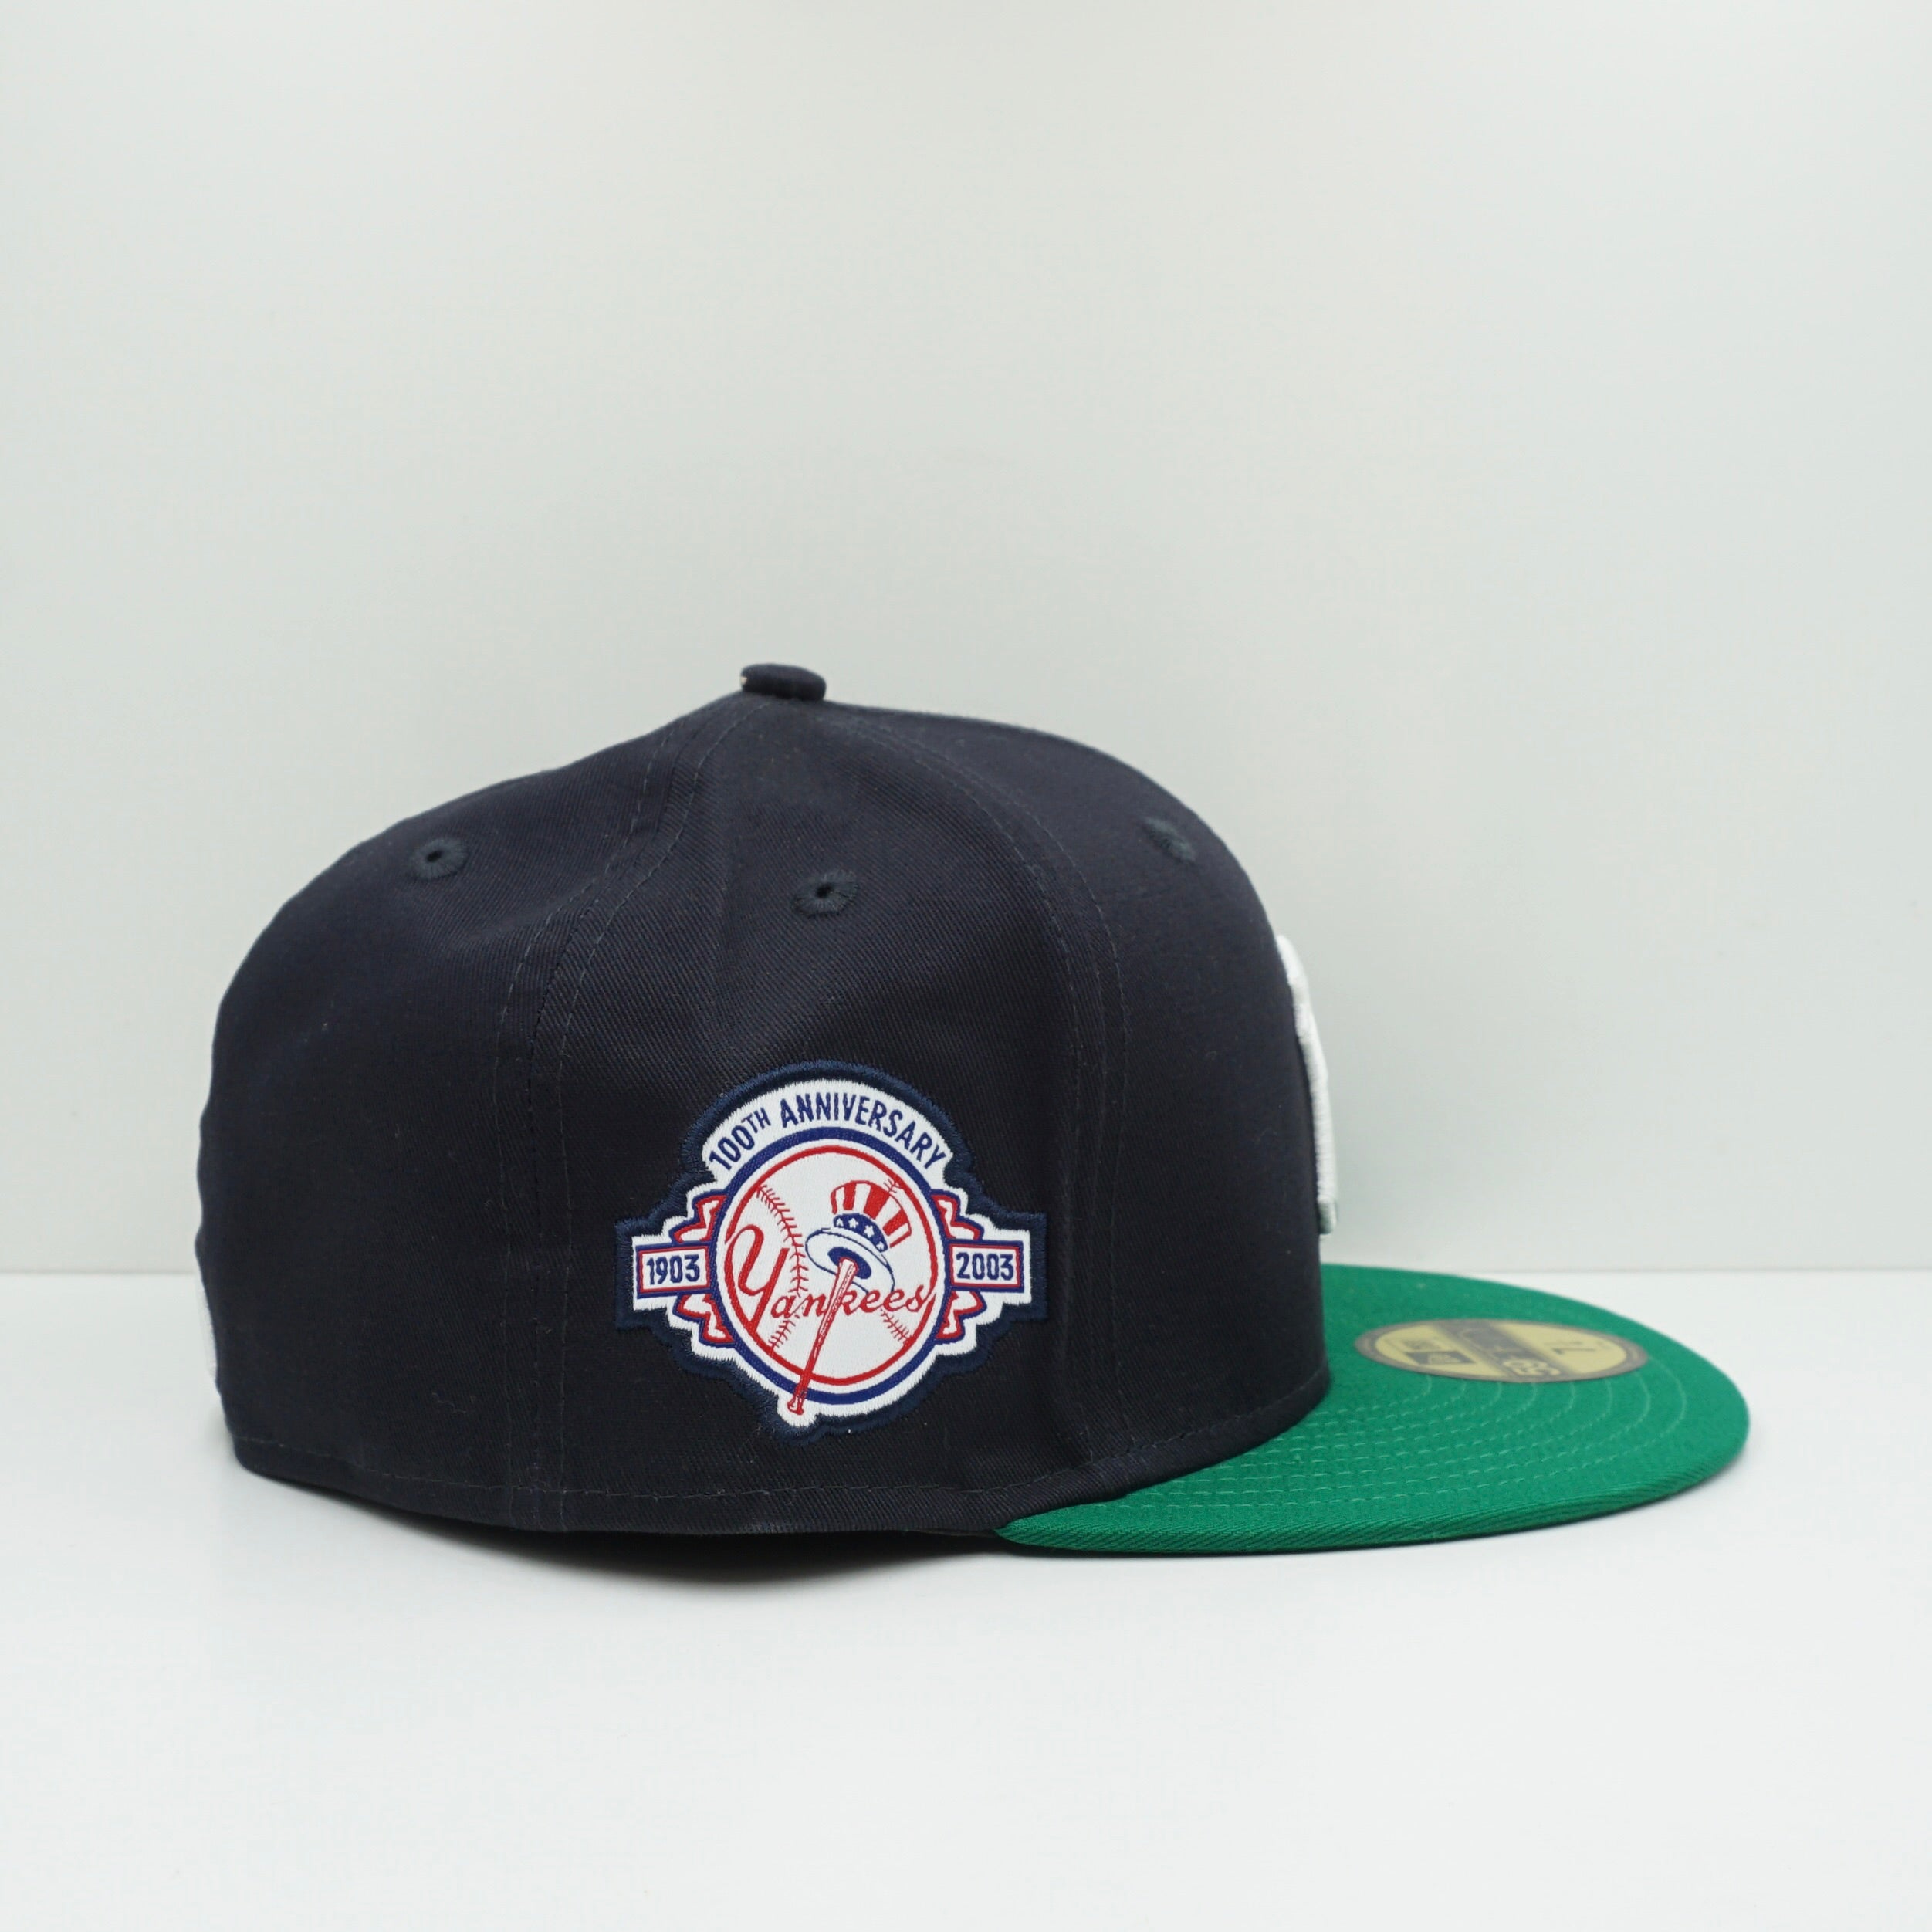 New Era New York Yankees Navy/Green Fitted Cap